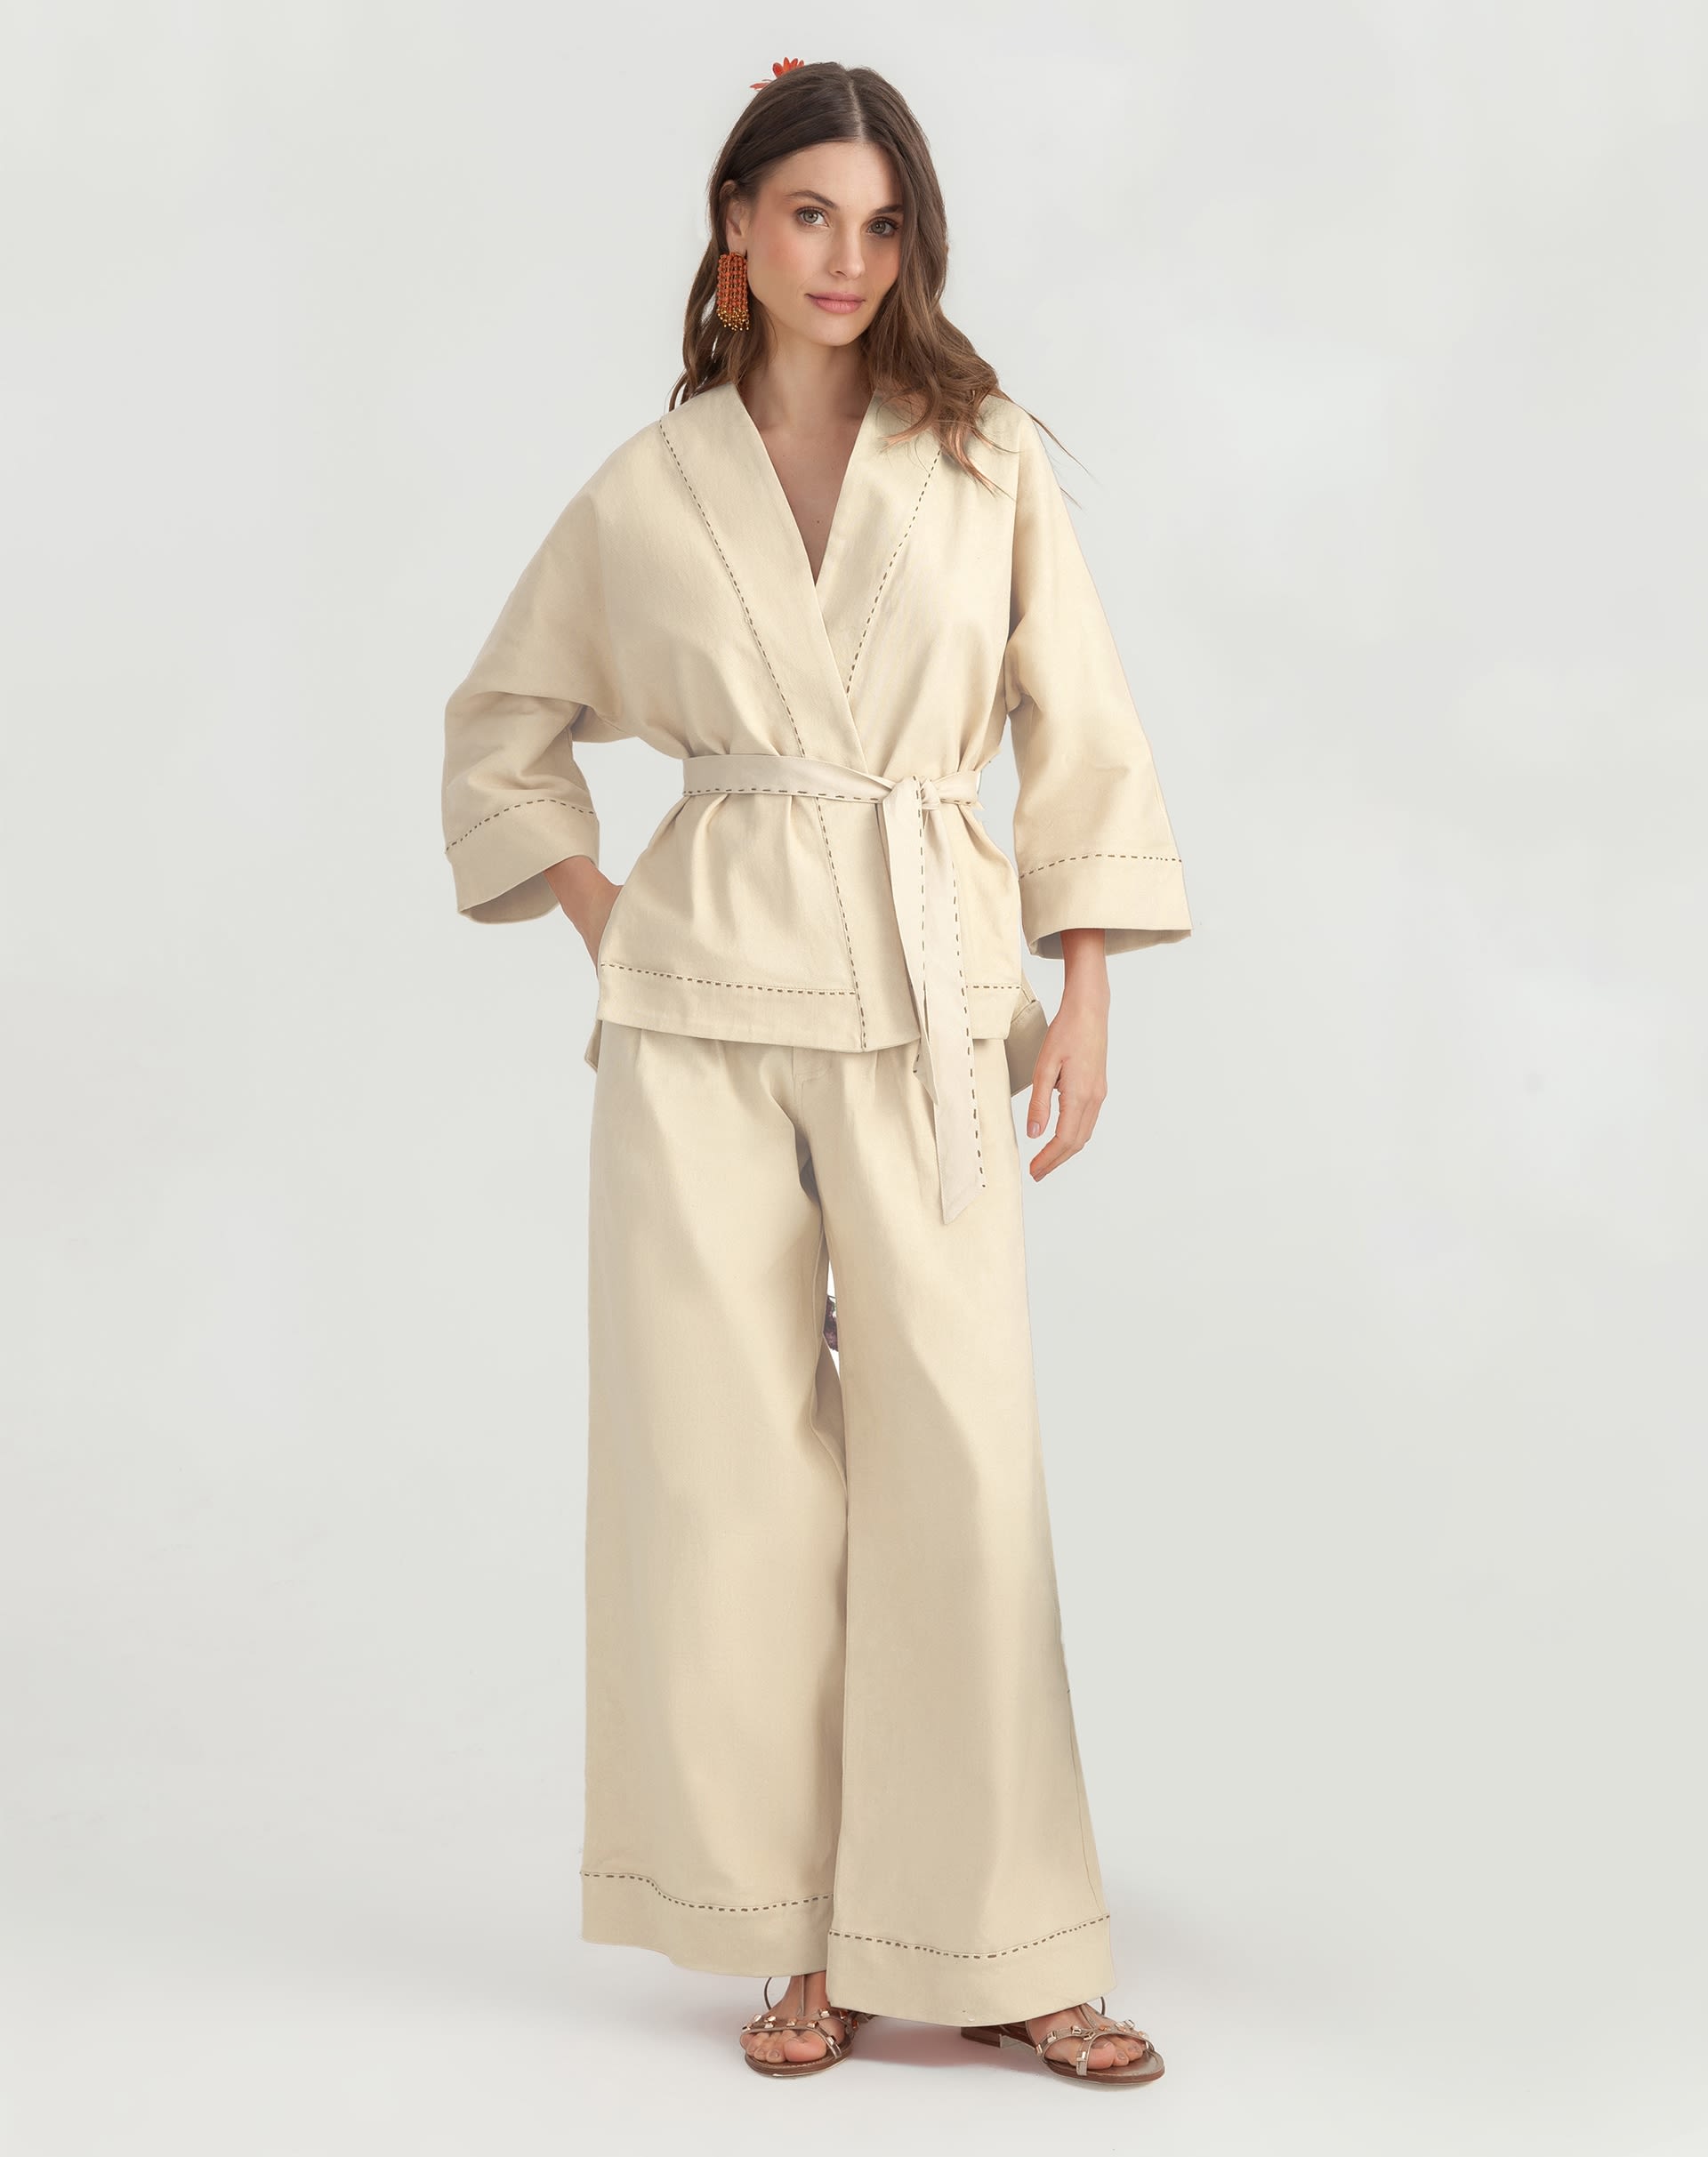 Kimono Ipê - BEGE